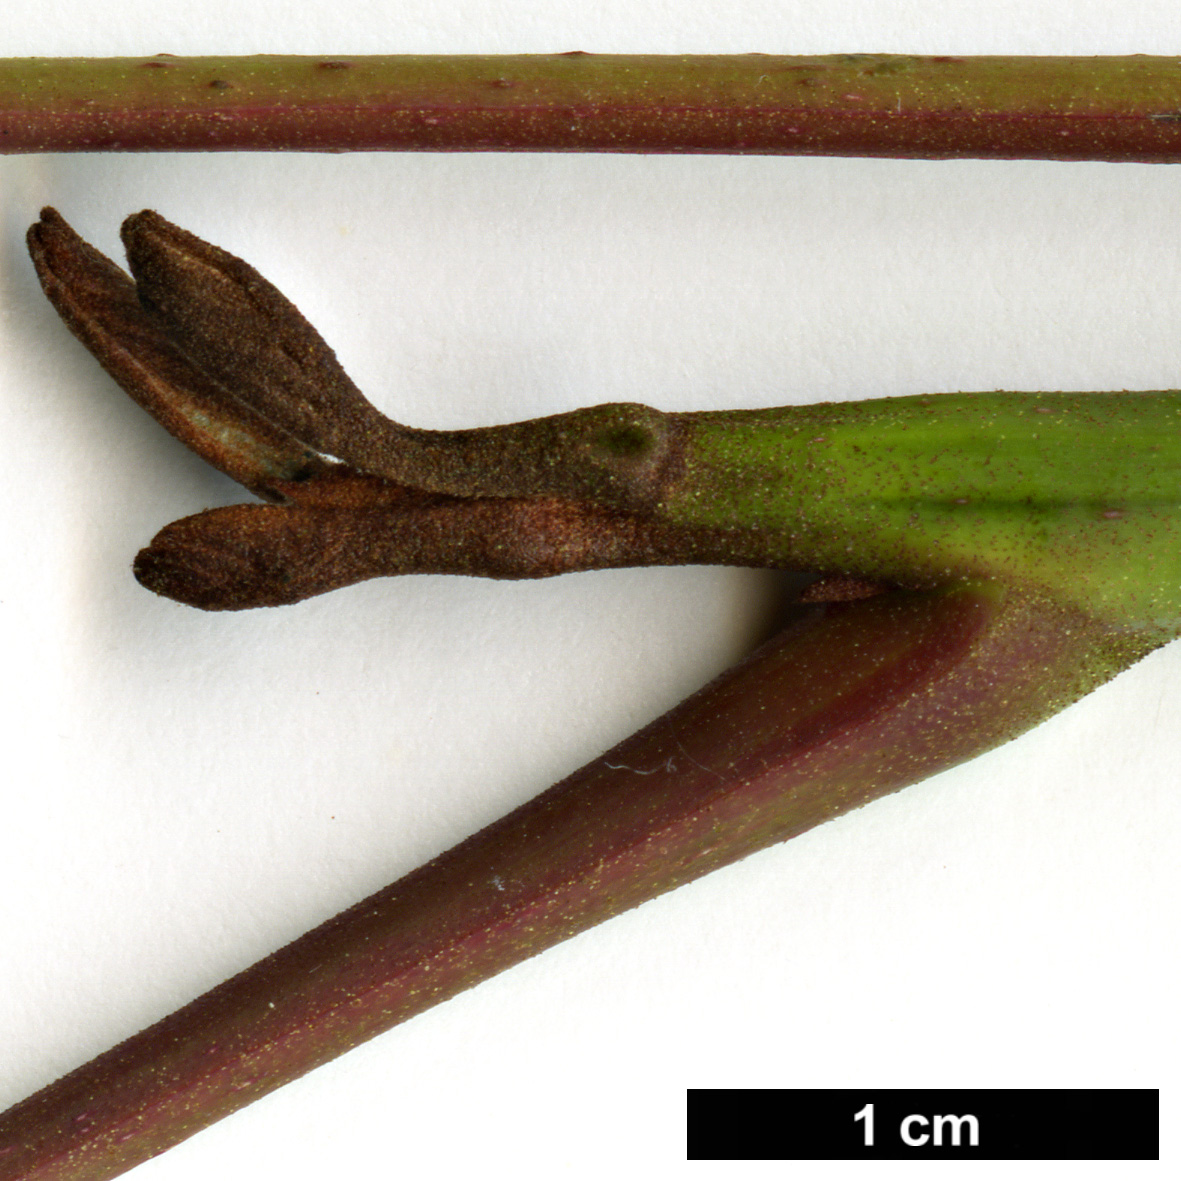 High resolution image: Family: Juglandaceae - Genus: Pterocarya - Taxon: hupehensis